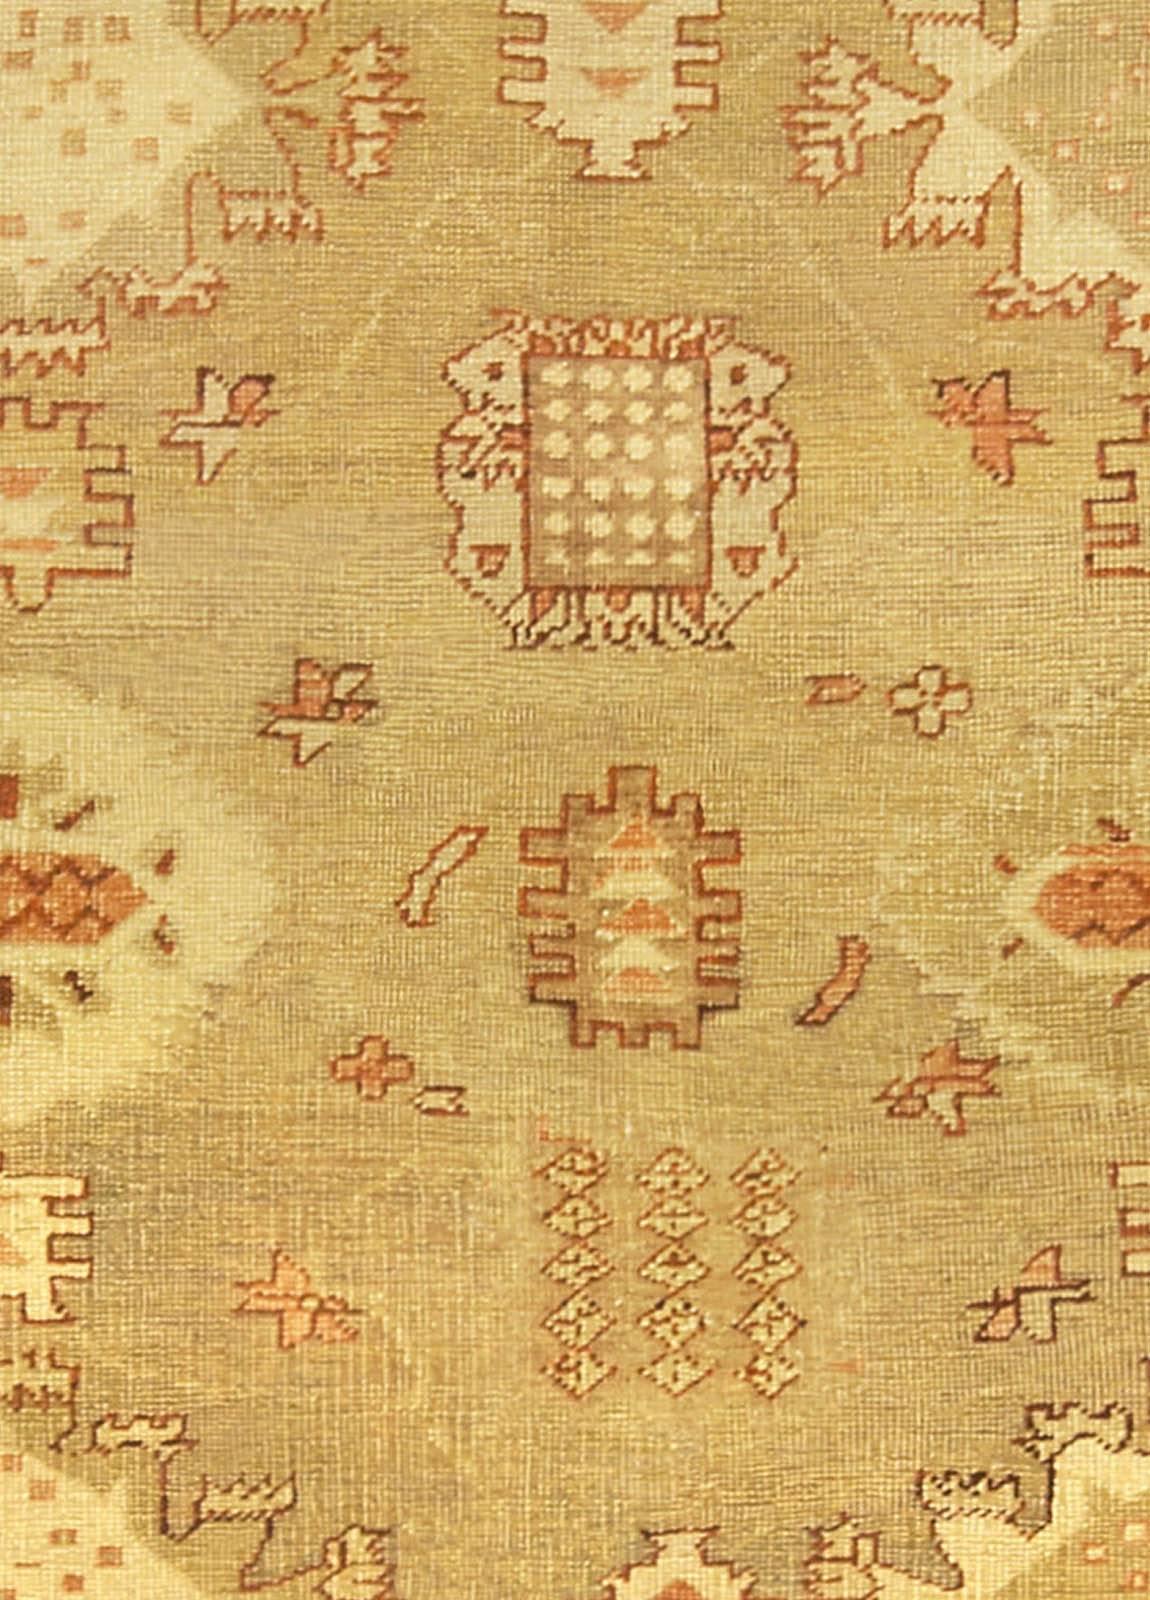 Early 20th century Indian Amritsar handmade wool rug
Size: 8'7